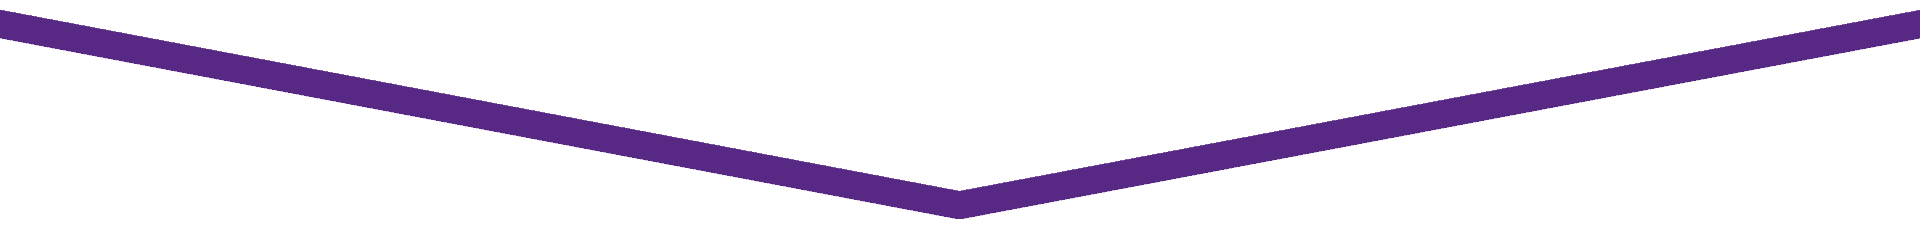 A purple triangle on a white background